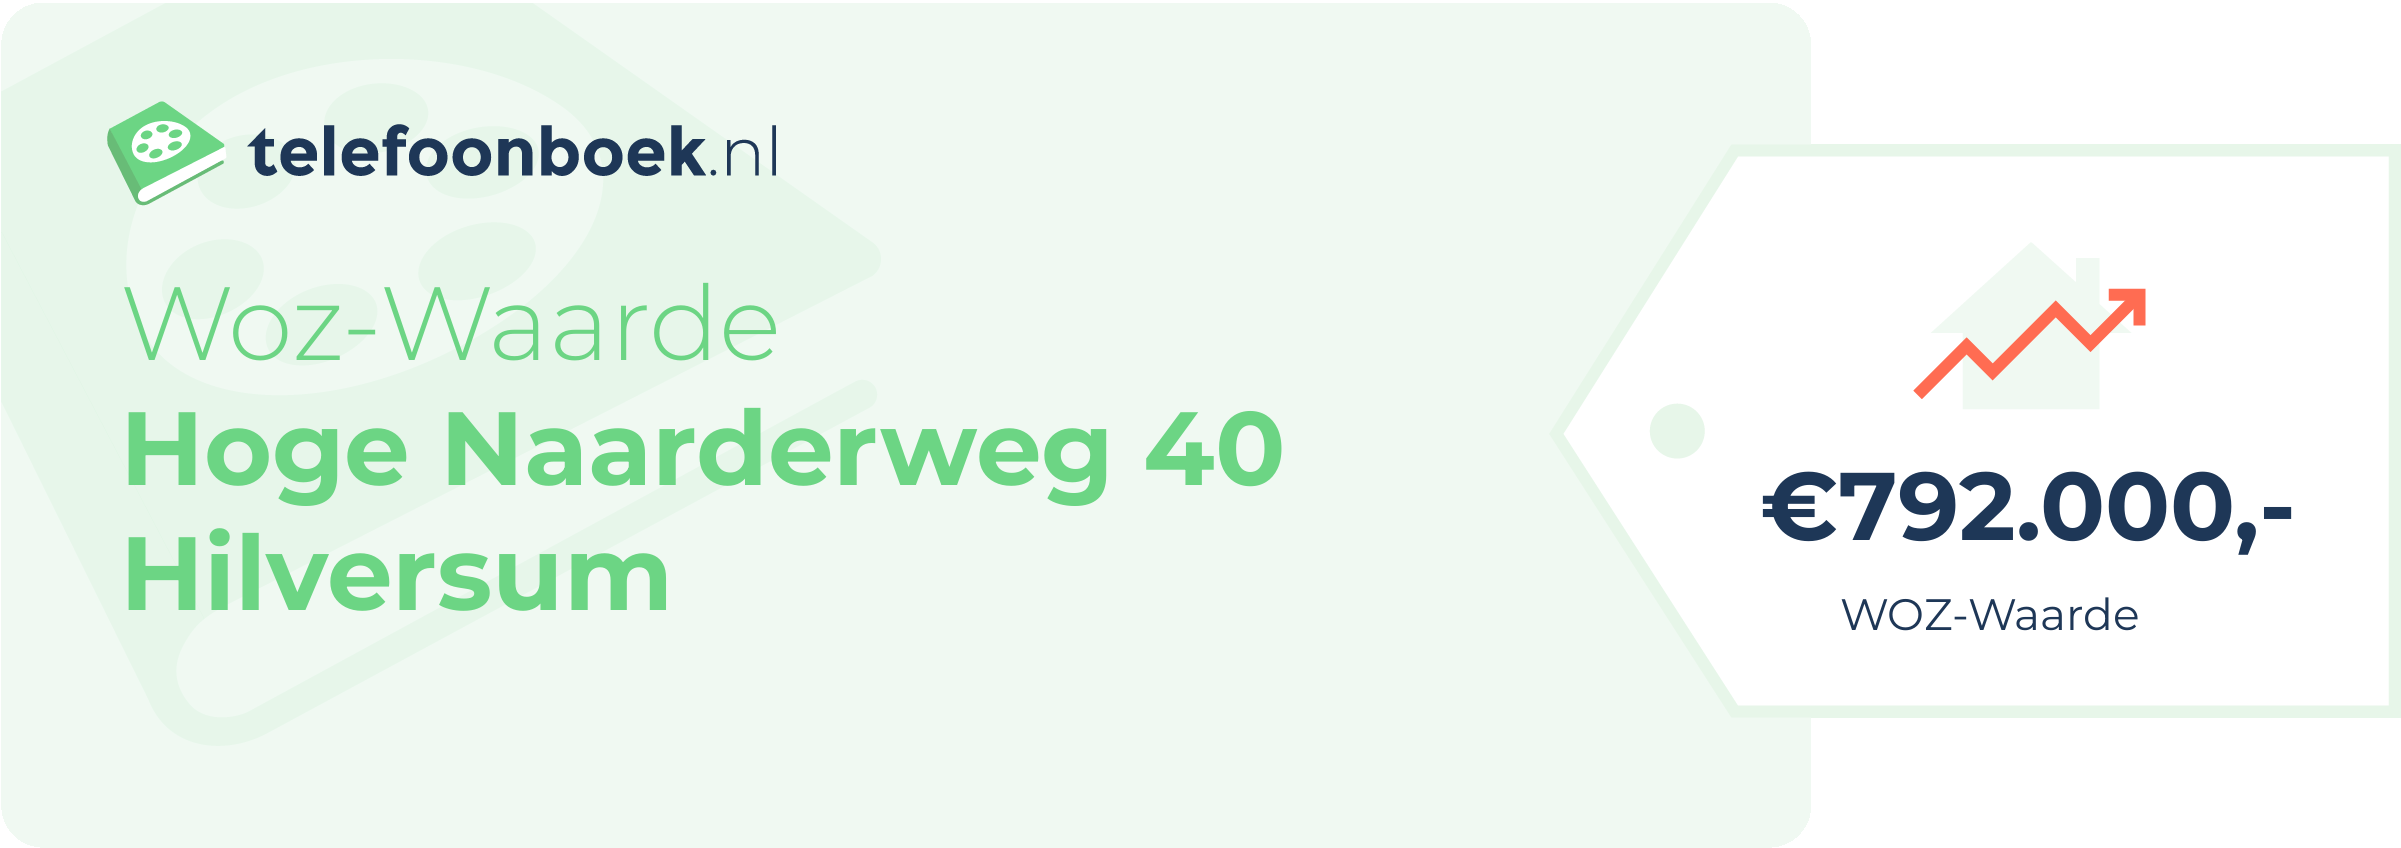 WOZ-waarde Hoge Naarderweg 40 Hilversum